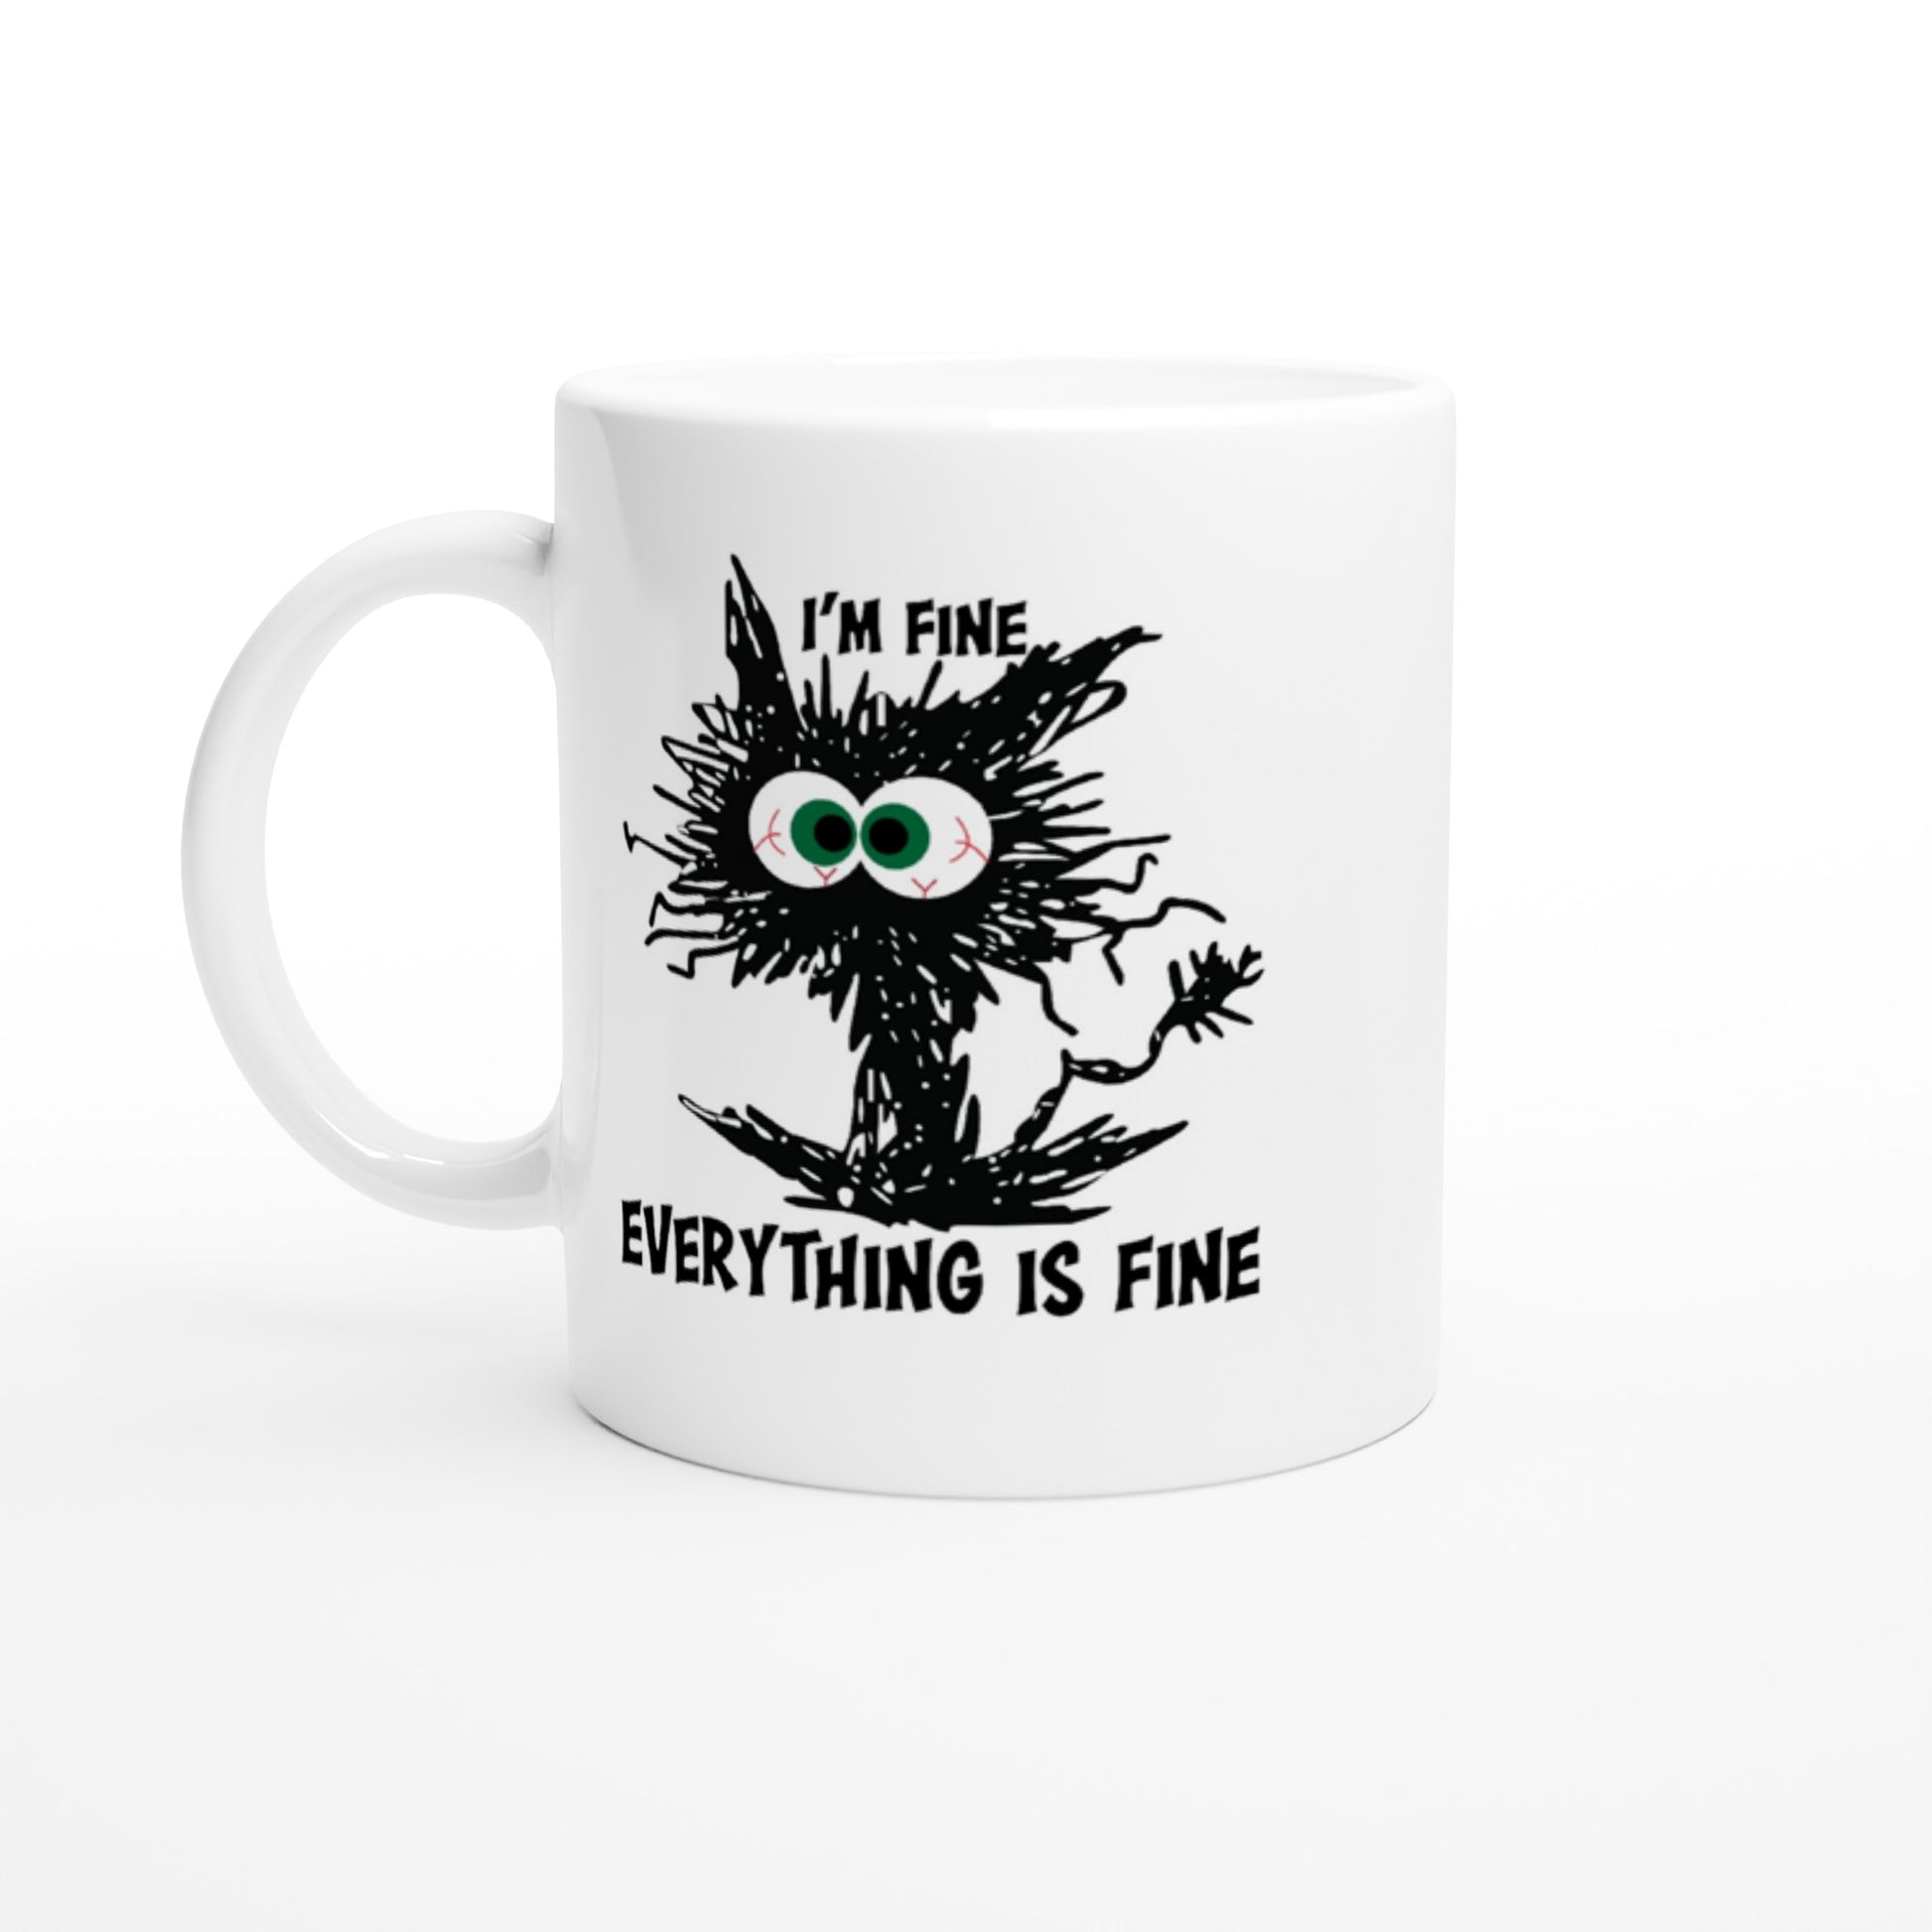 I'm Fine, Everything is Fine - White 11oz Ceramic Mug - Mister Snarky's